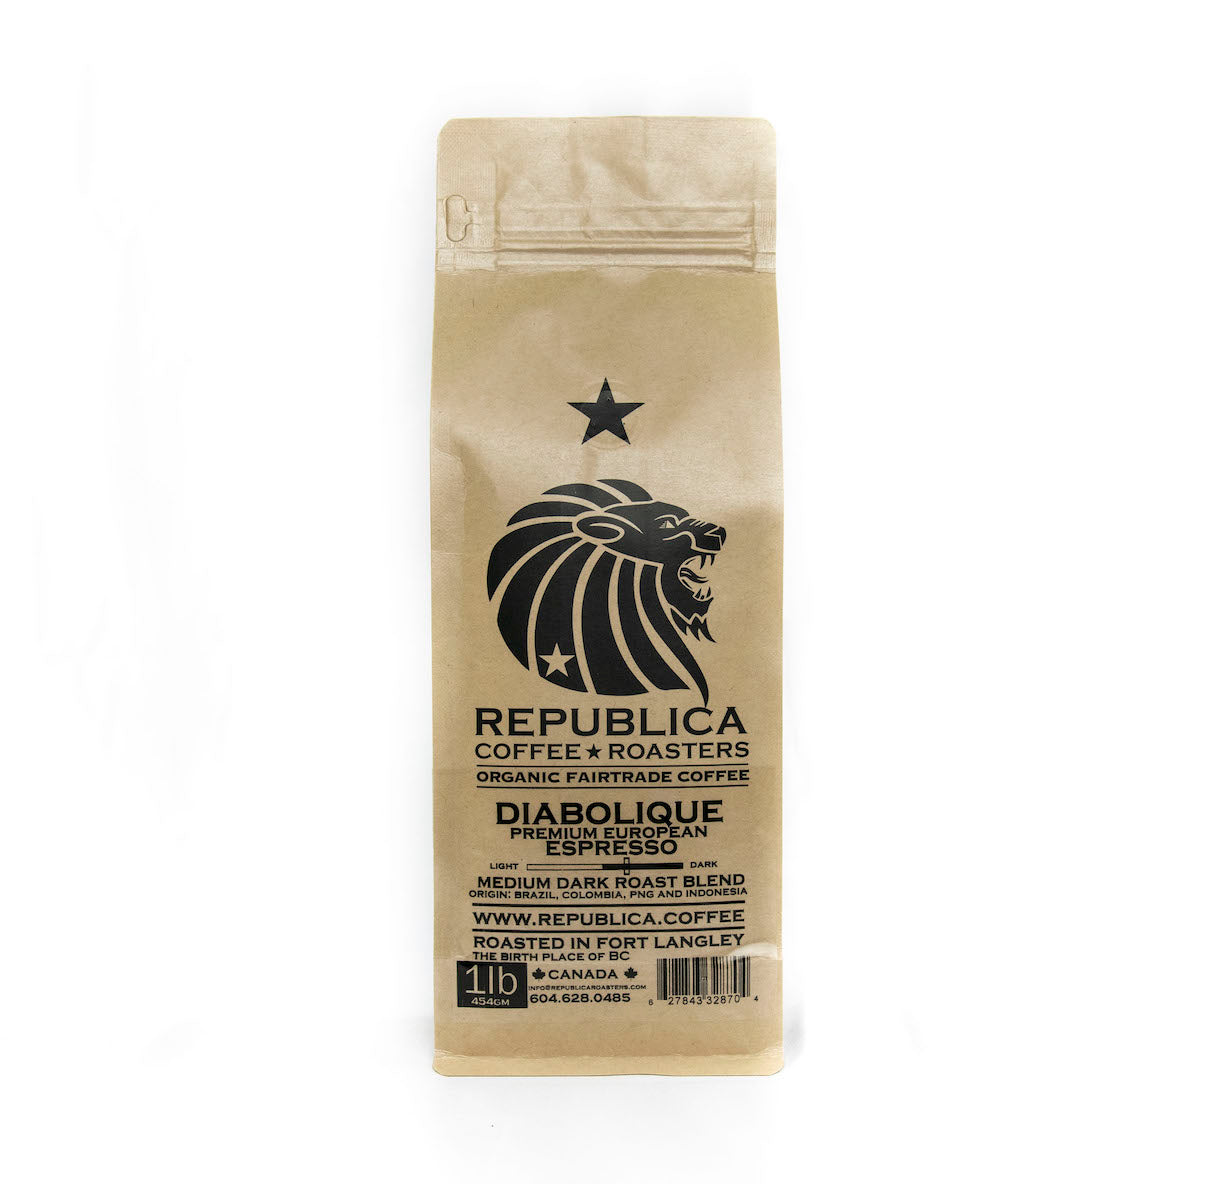 Republica Coffee - Diabolique